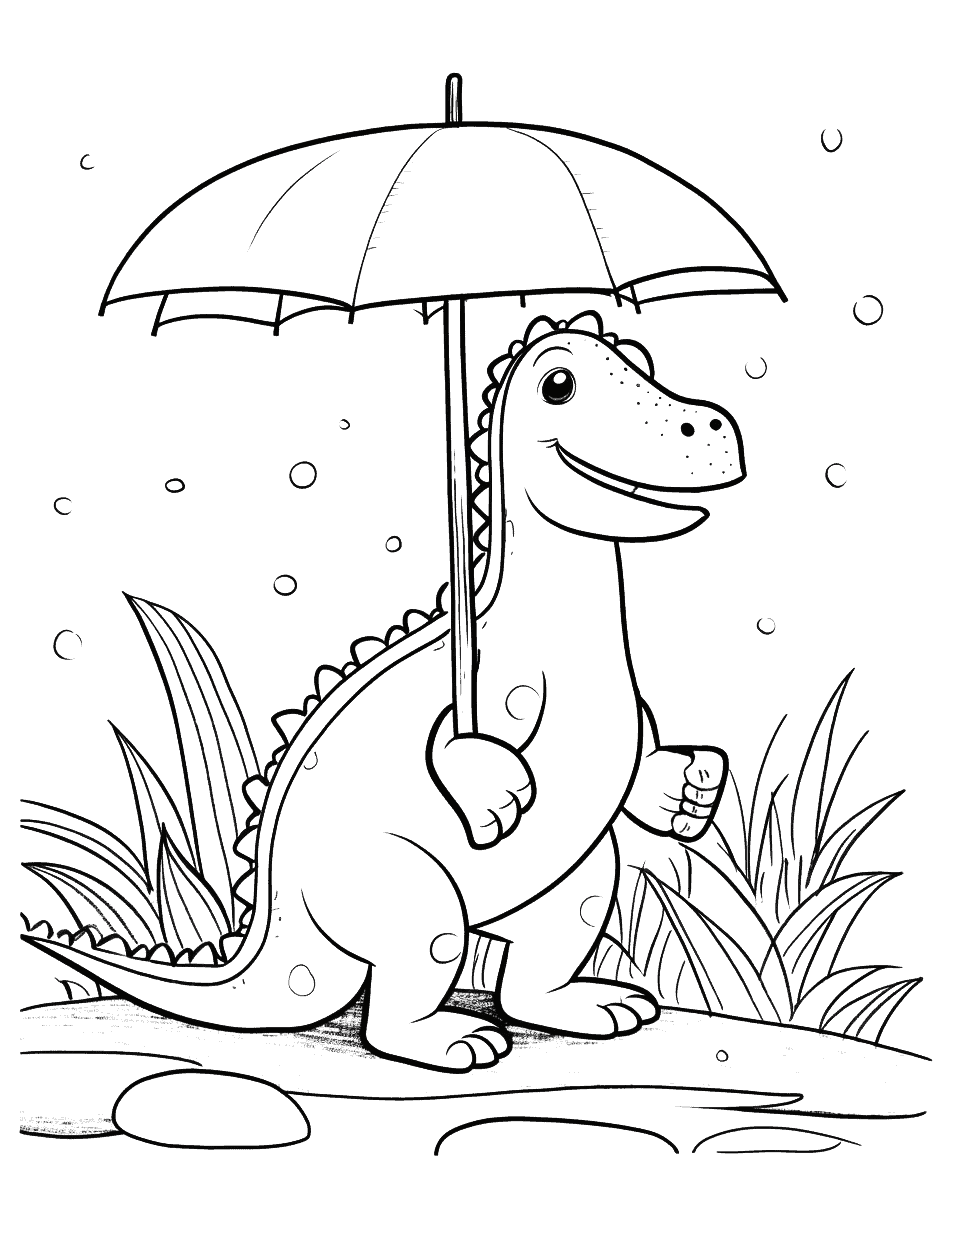 Baryonyx Holding an Umbrella Dinosaur Coloring Page - A Baryonyx hunting in a swamp during a rainstorm using an umbrella.